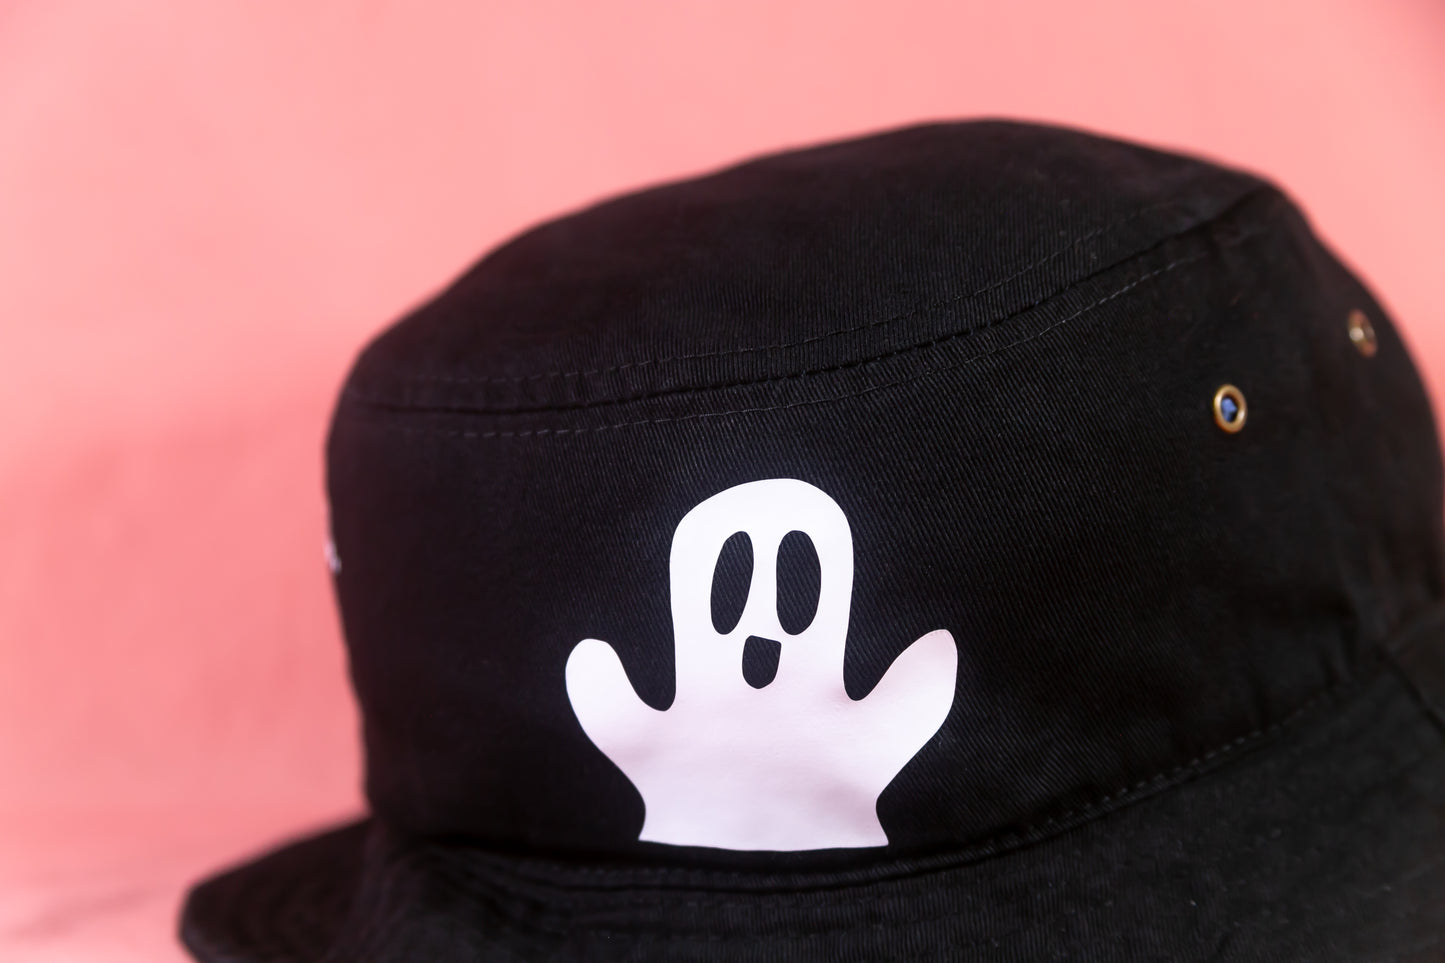 Boo Ghost Black Bucket Hat